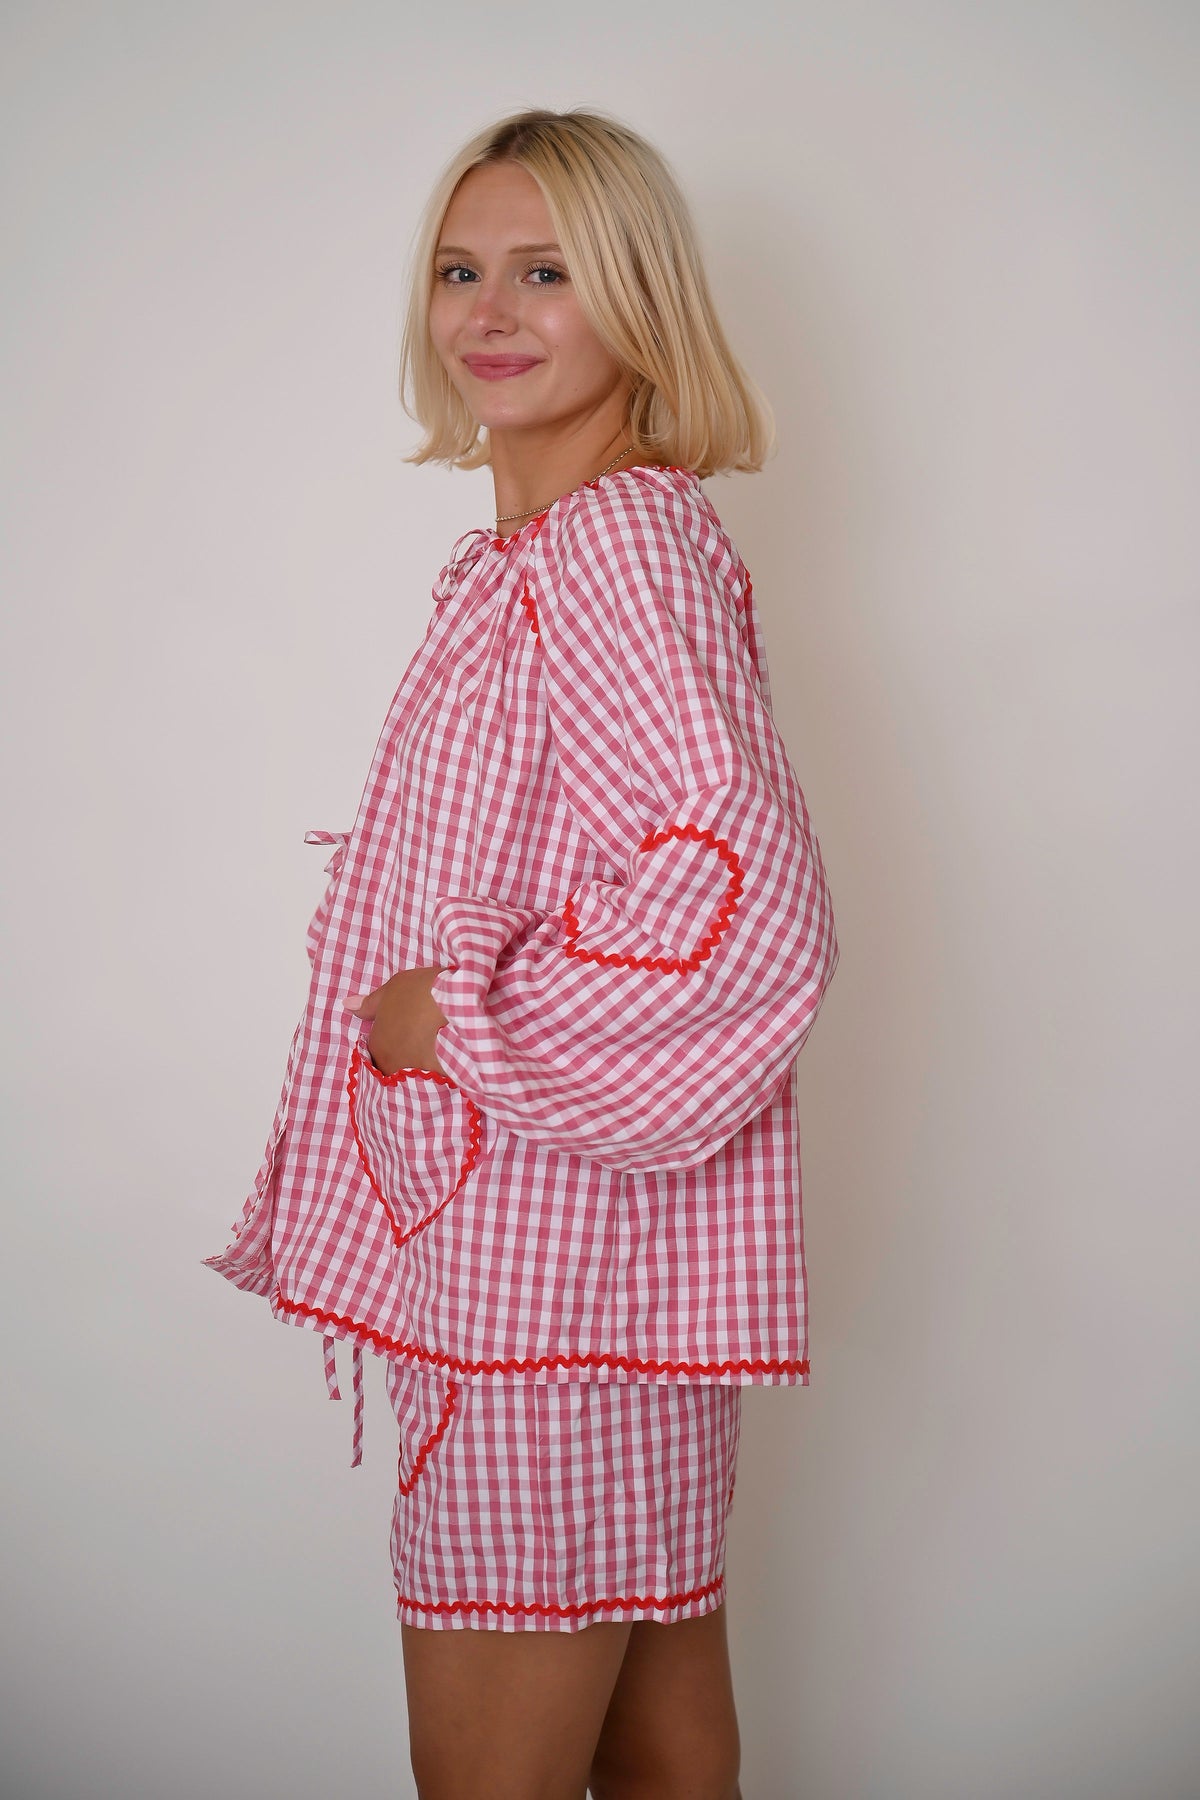 Candy Heart Pajama Set